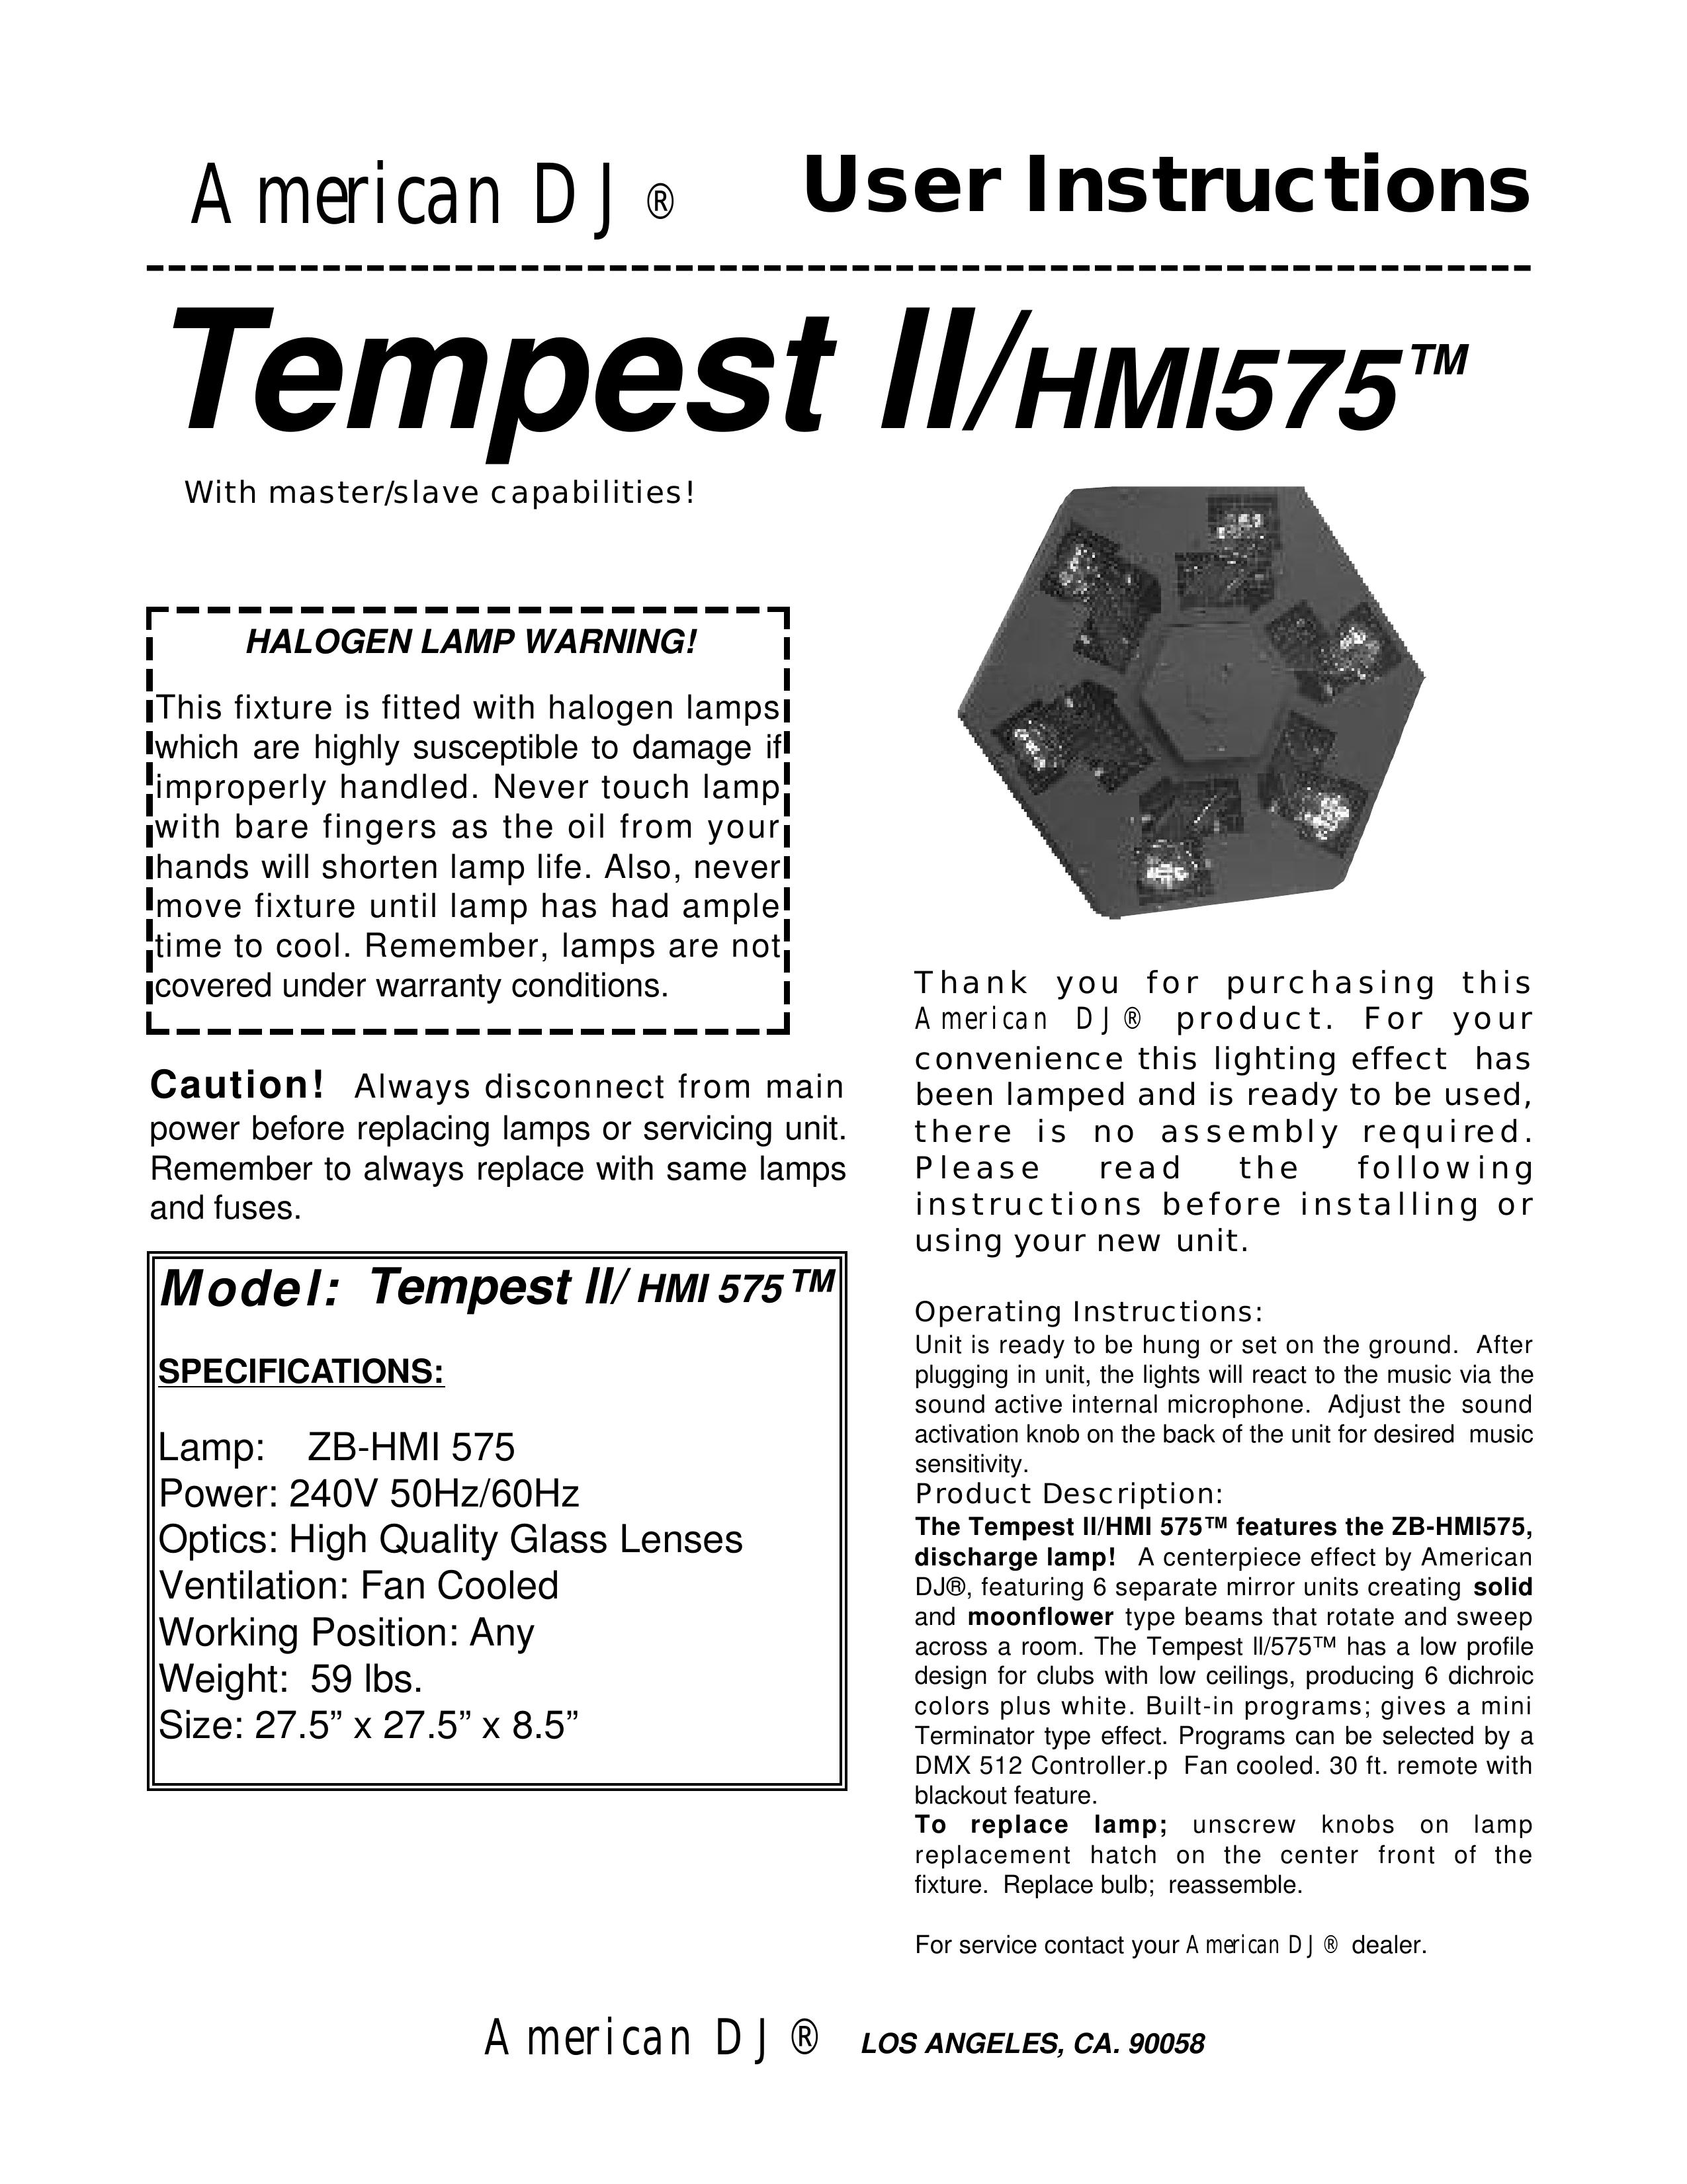 American DJ HMI 575TM DJ Equipment User Manual (Page 1)